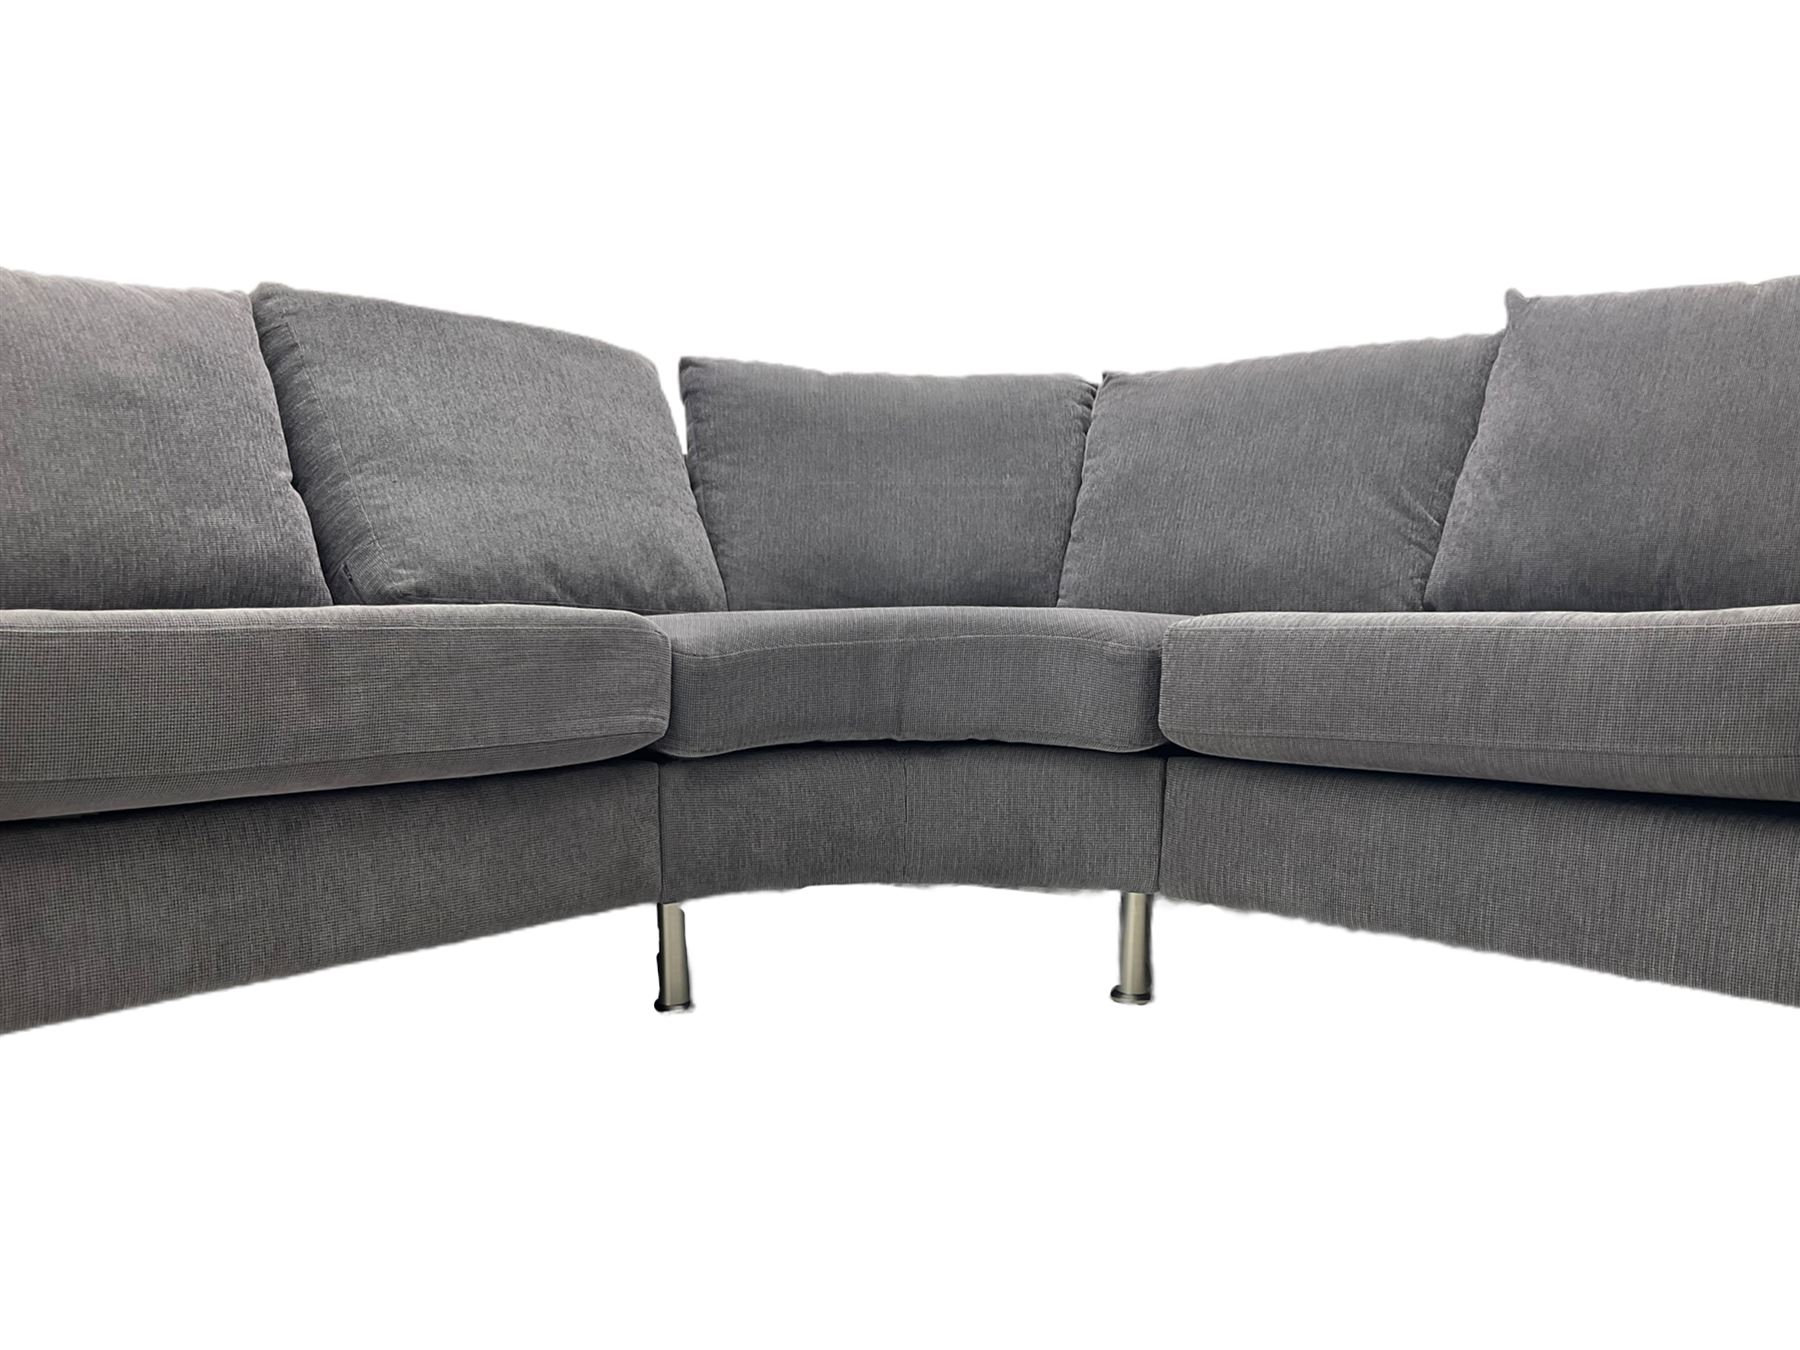 BoConcept 'Indivi 2' corner lounge sofa in grey Matera fabric - Image 8 of 8